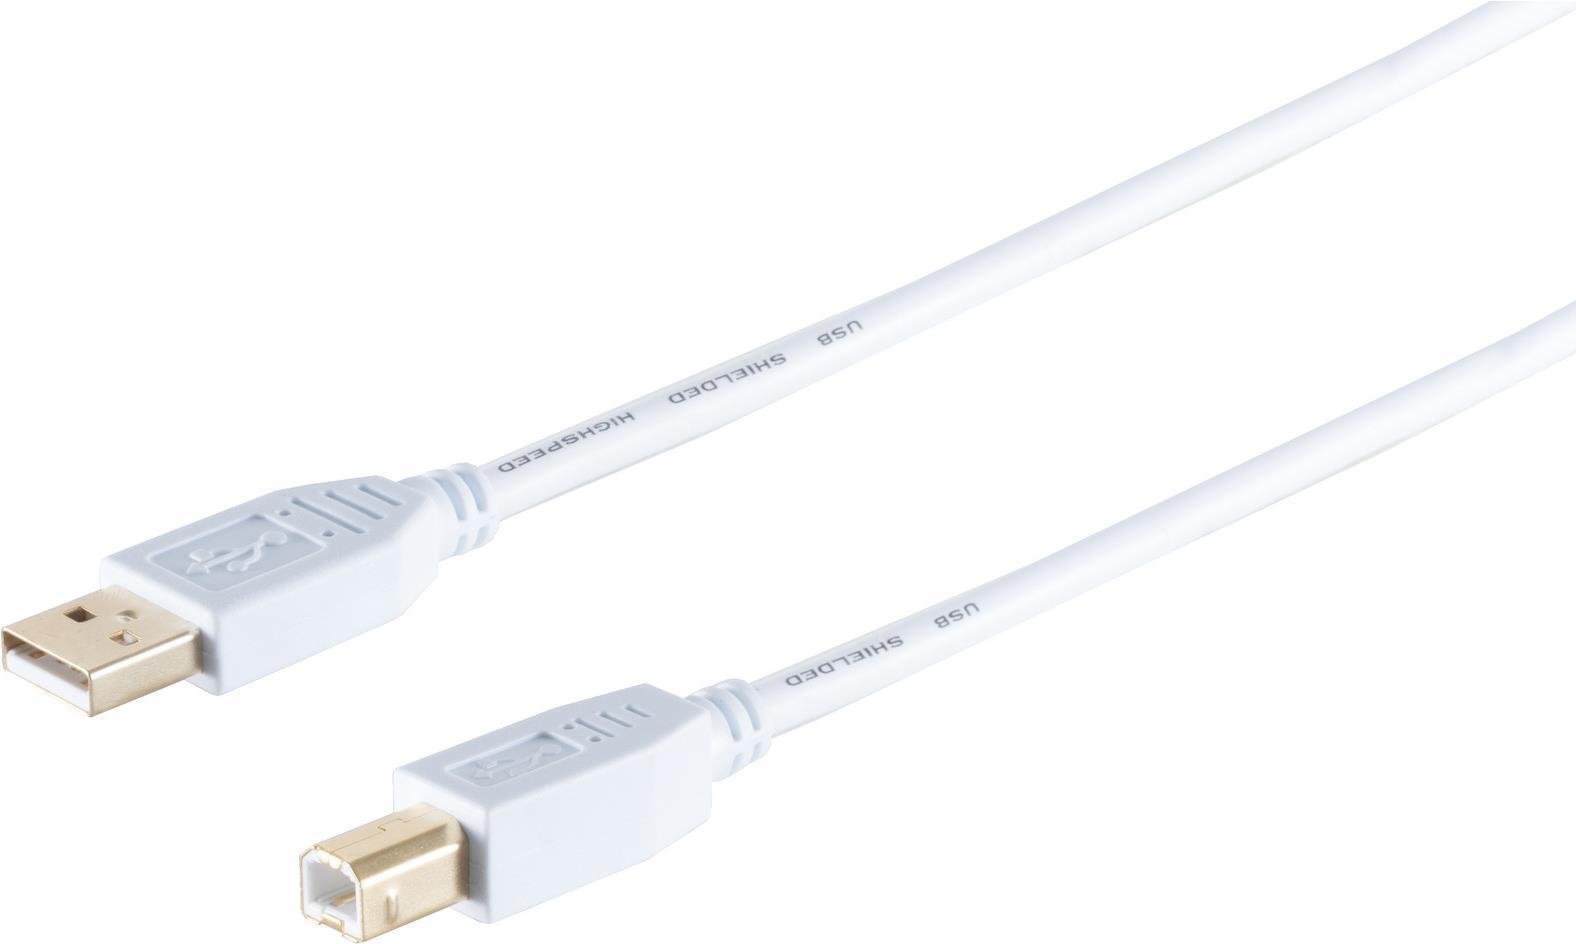 S/CONN maximum connectivity USB High Speed 2.0 Kabel, A/B Stecker, vergoldete Kontakte, USB 2.0, weiß, 1,8m (77022-W)